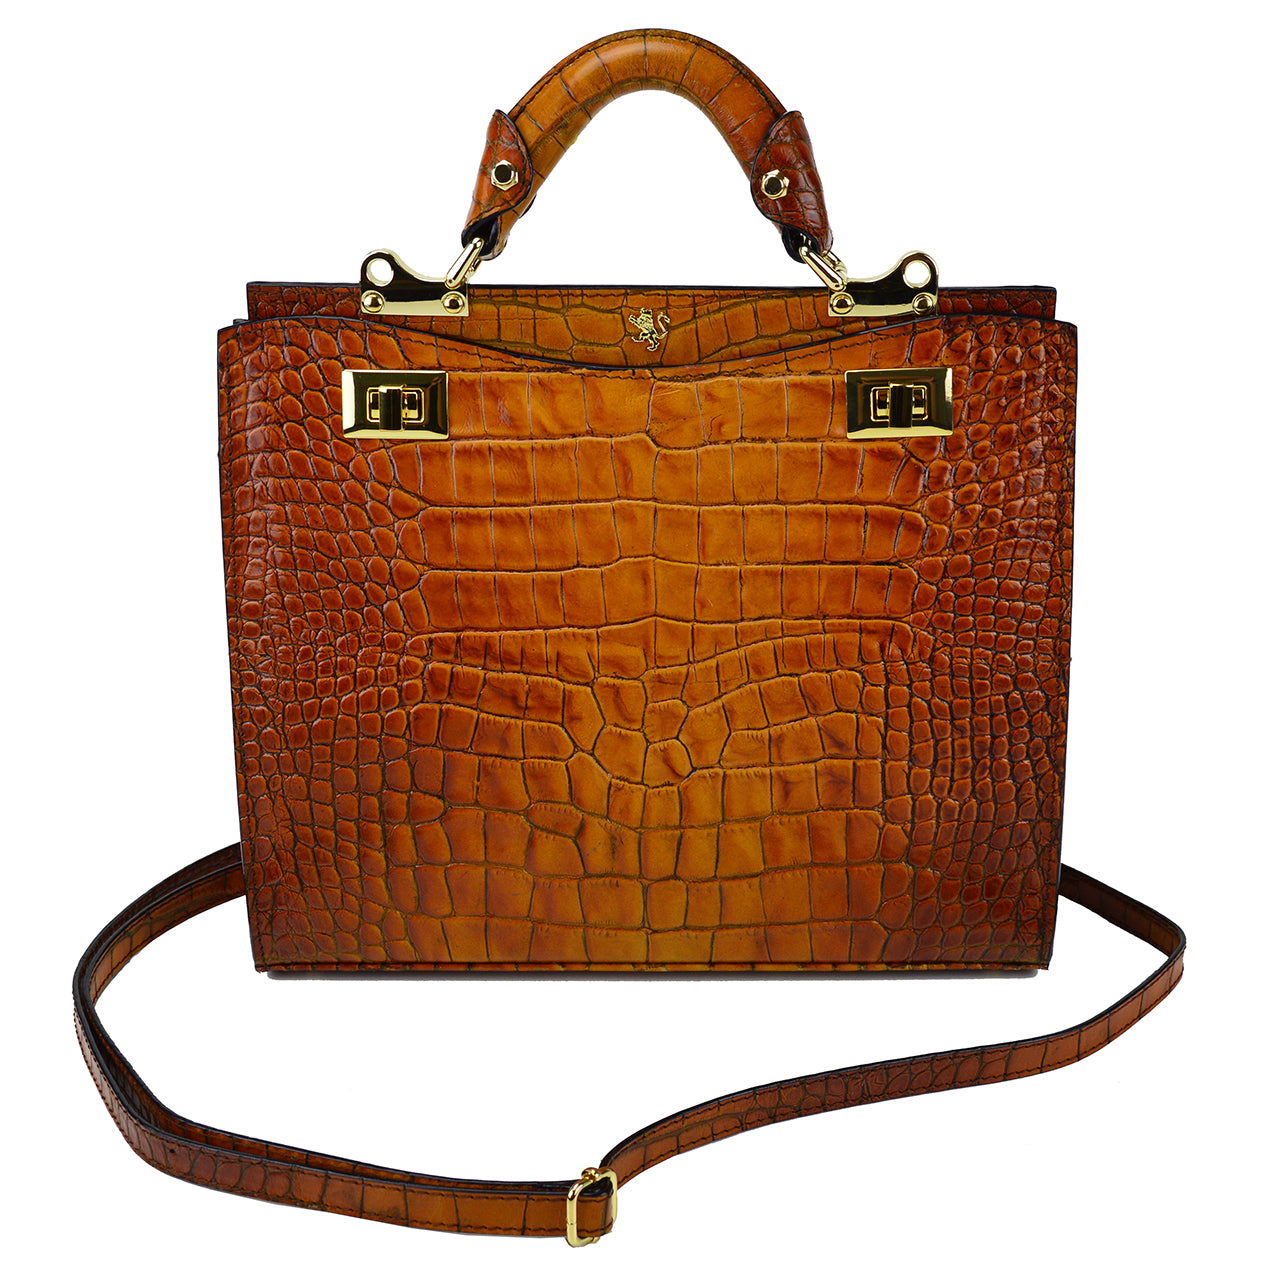 Pratesi Anna Maria Luisa de' Medici Medium King Lady Bag in genuine Italian leather